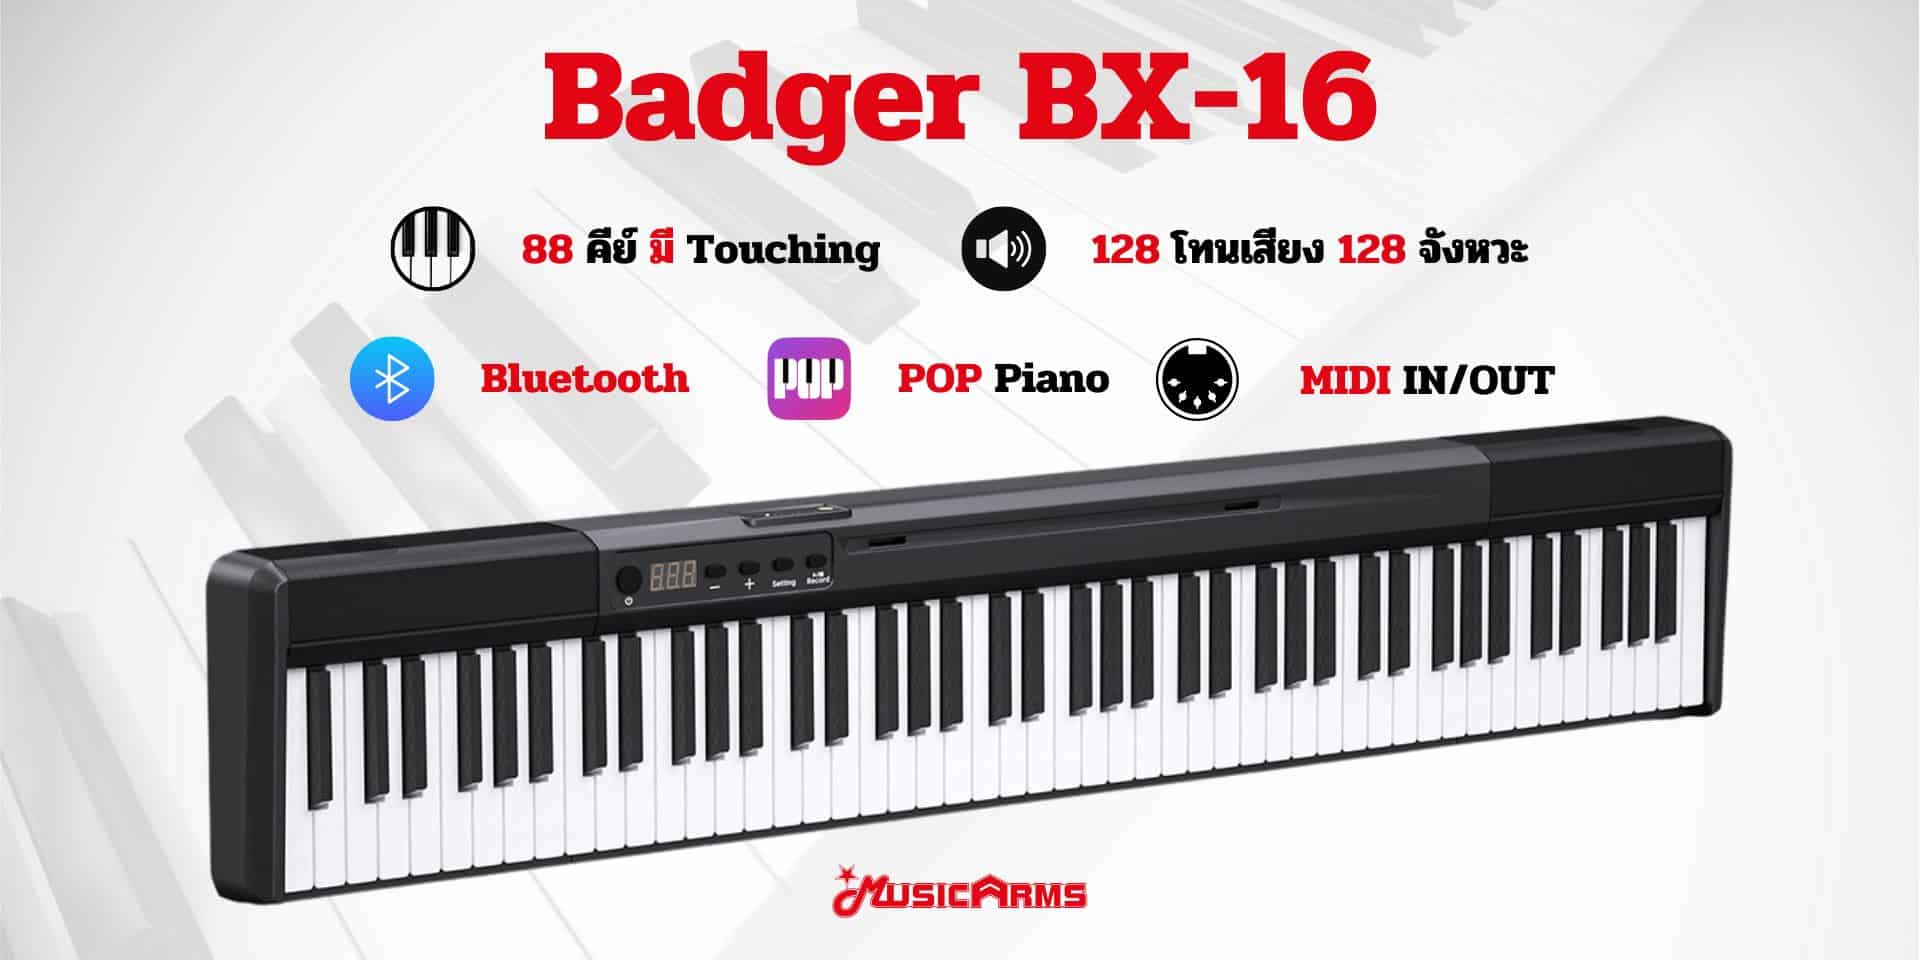 Badger BX-16